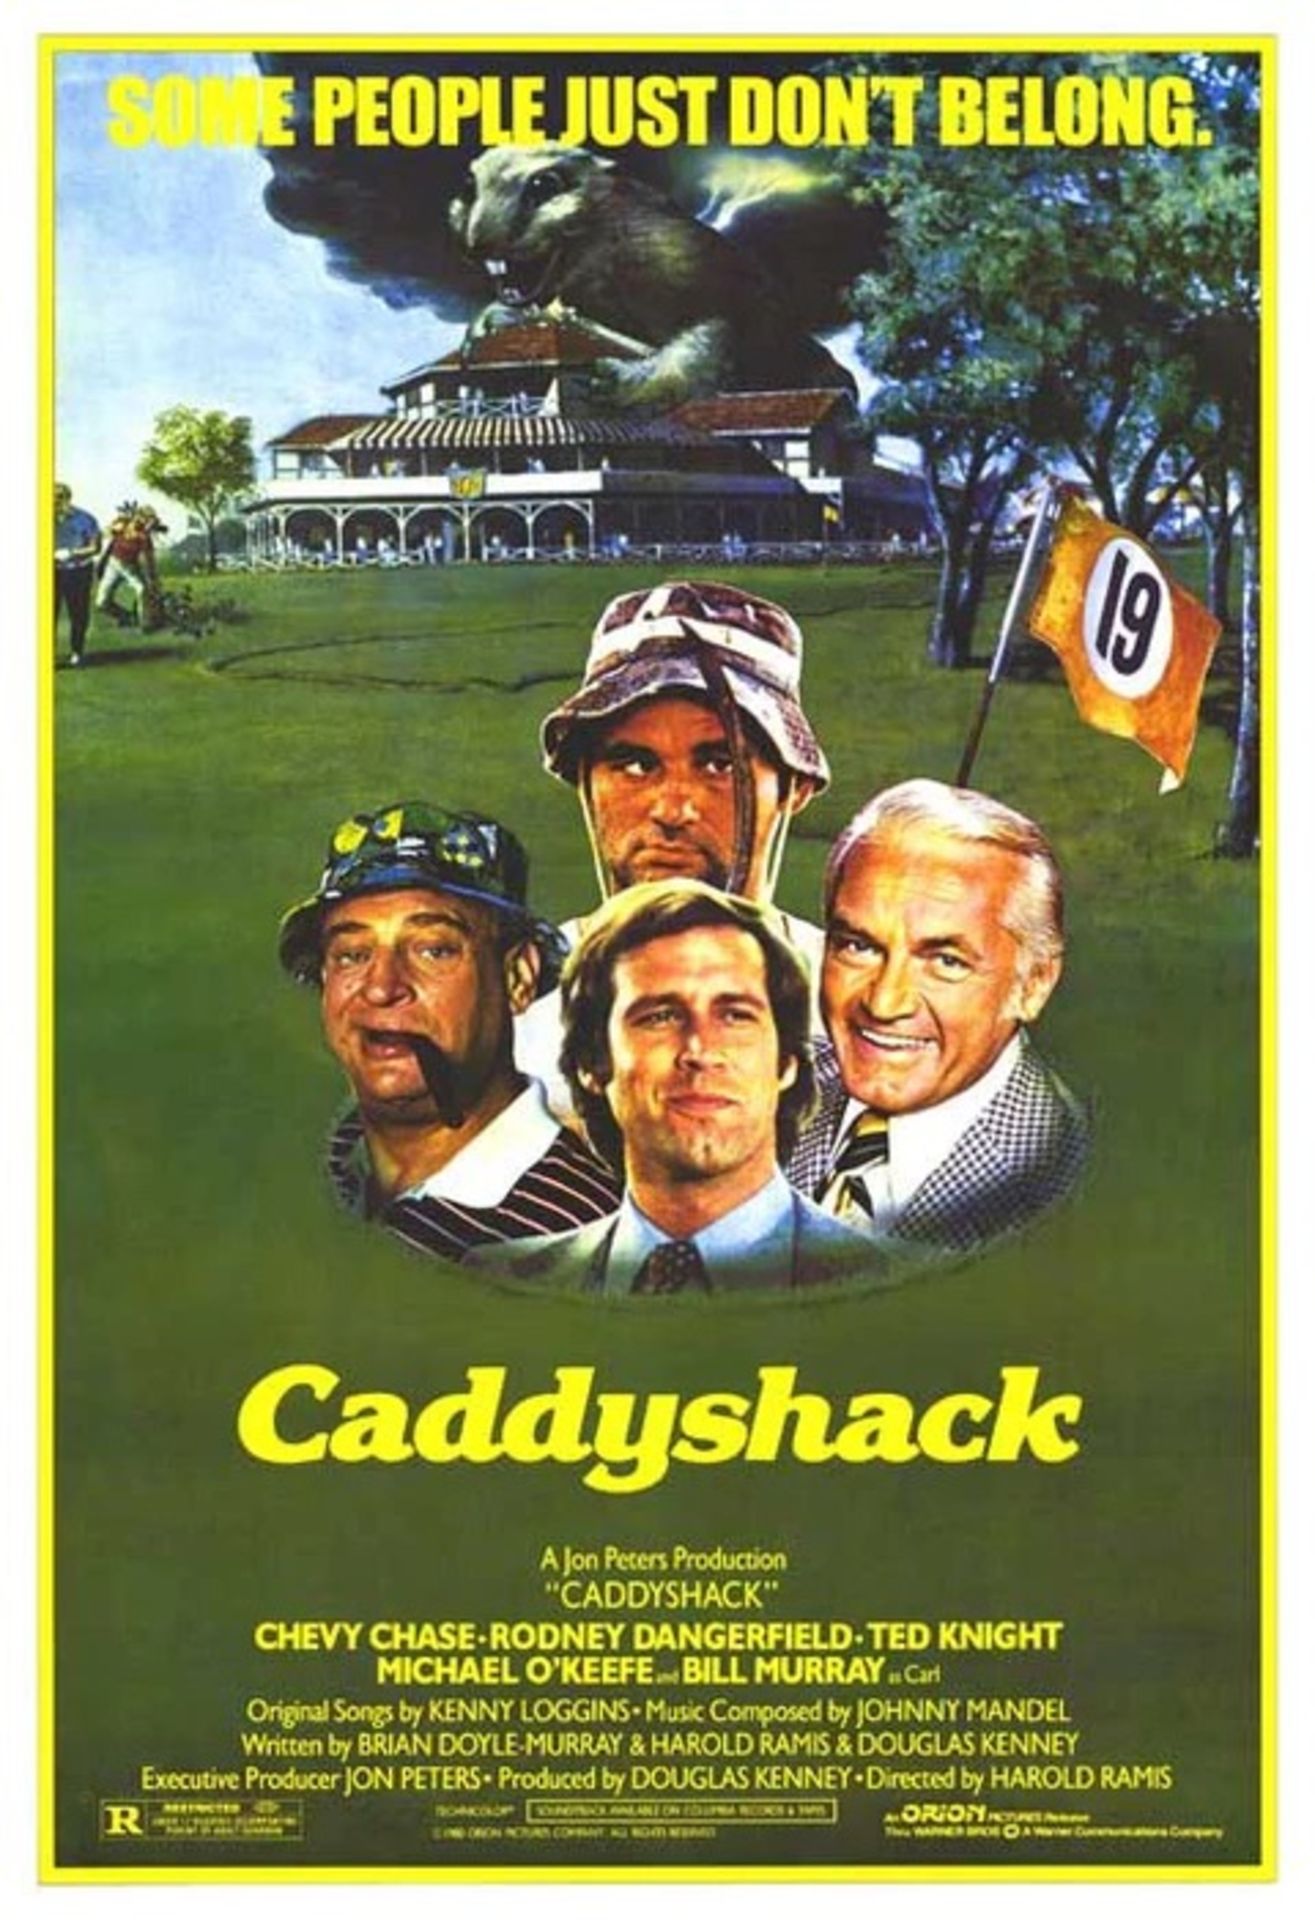 Caddyshack "1980" Poster